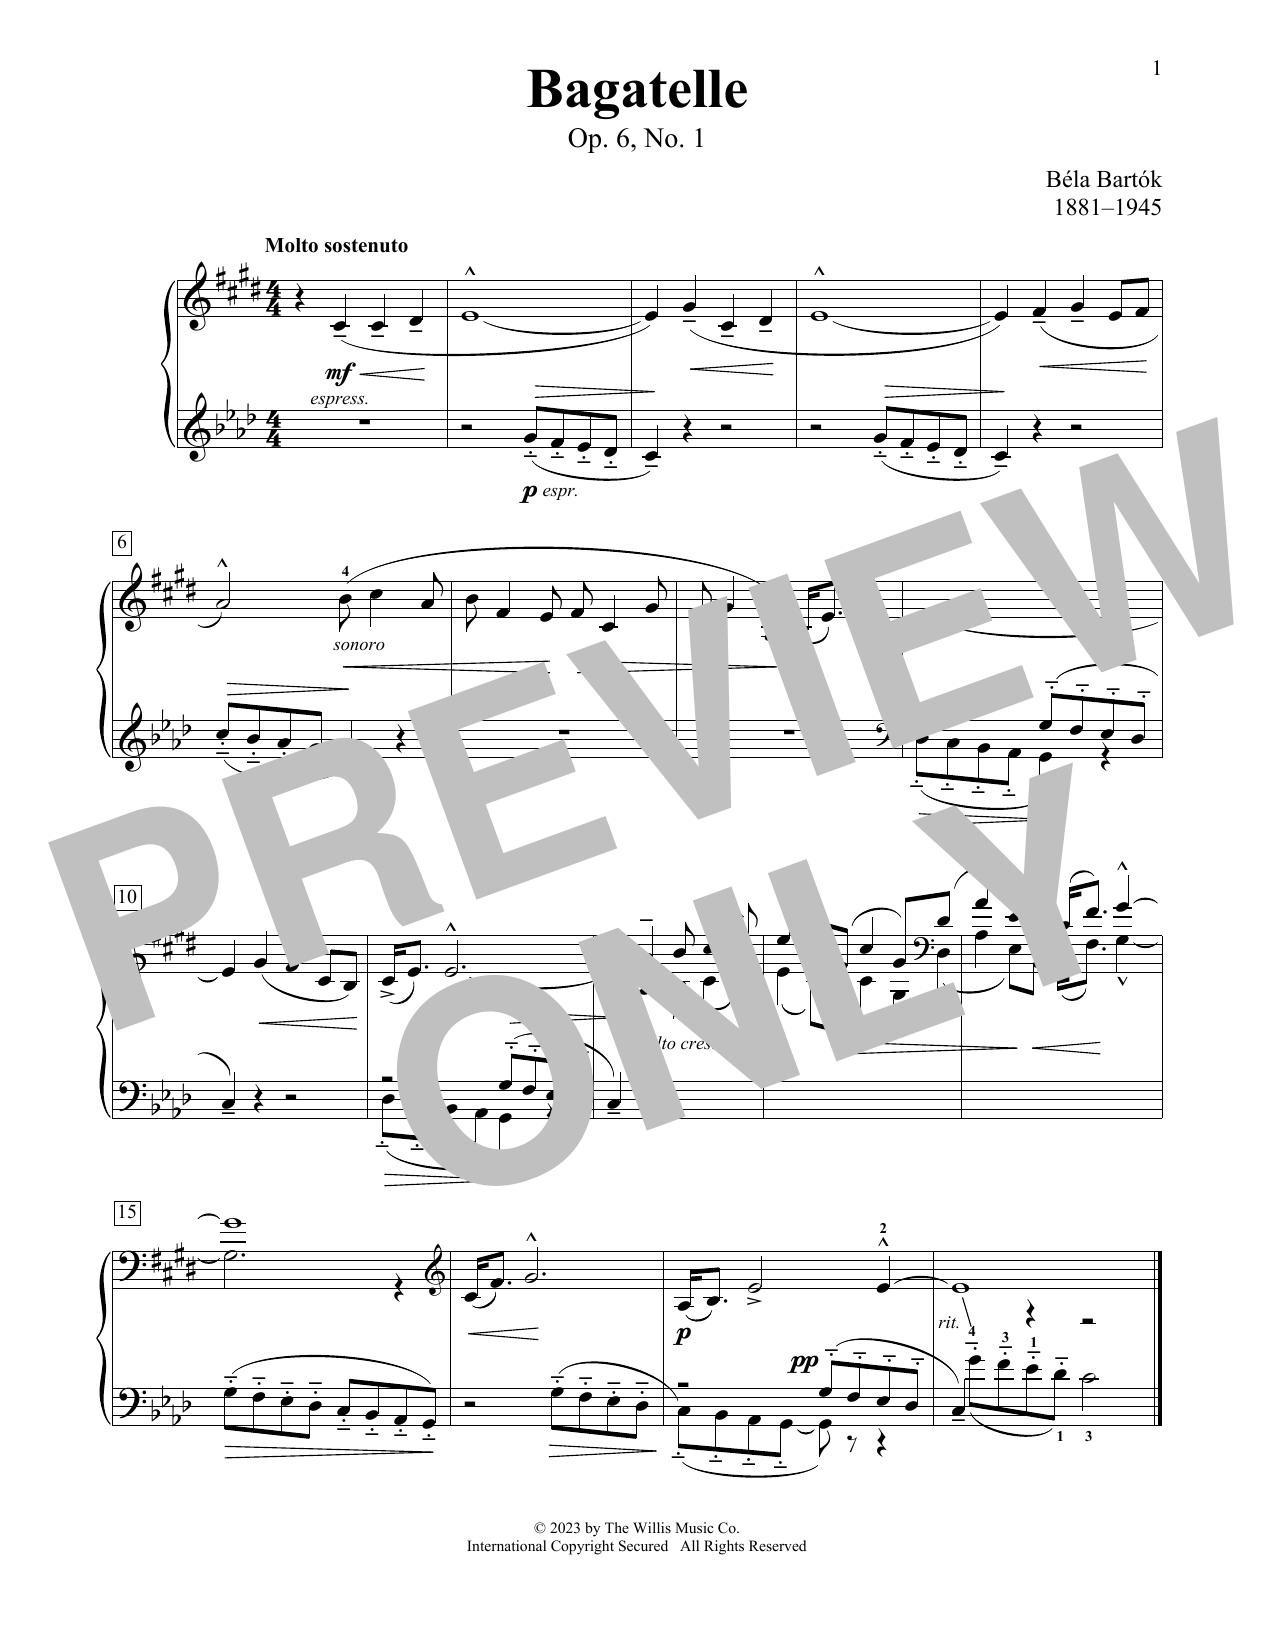 Bela Bartok Bagatelle, Op. 6, No. 1 sheet music notes printable PDF score